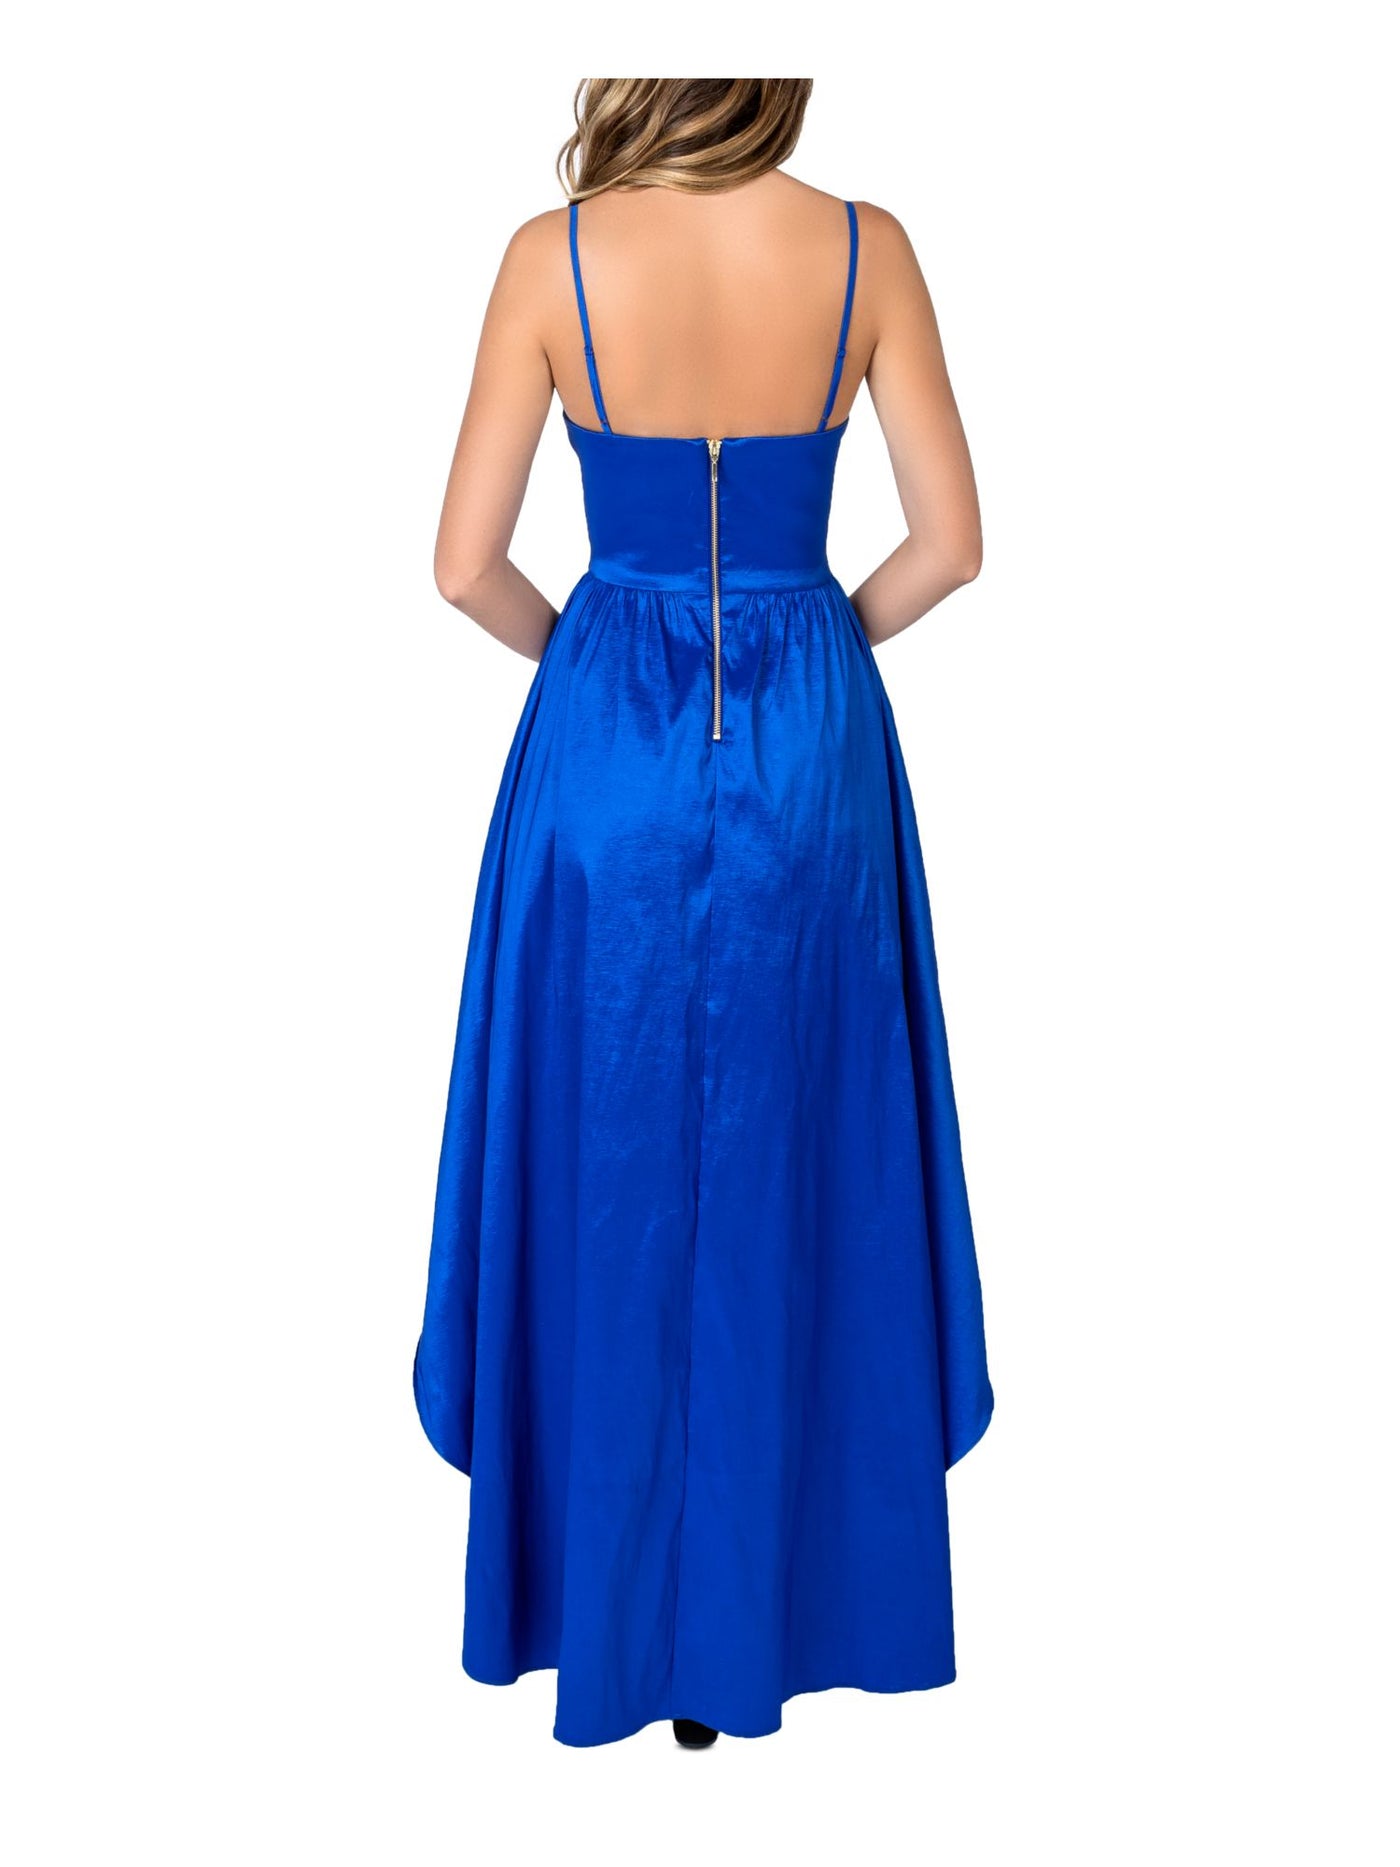 B DARLIN Womens Blue Spaghetti Strap Sweetheart Neckline Short Prom Hi-Lo Dress Juniors 3\4